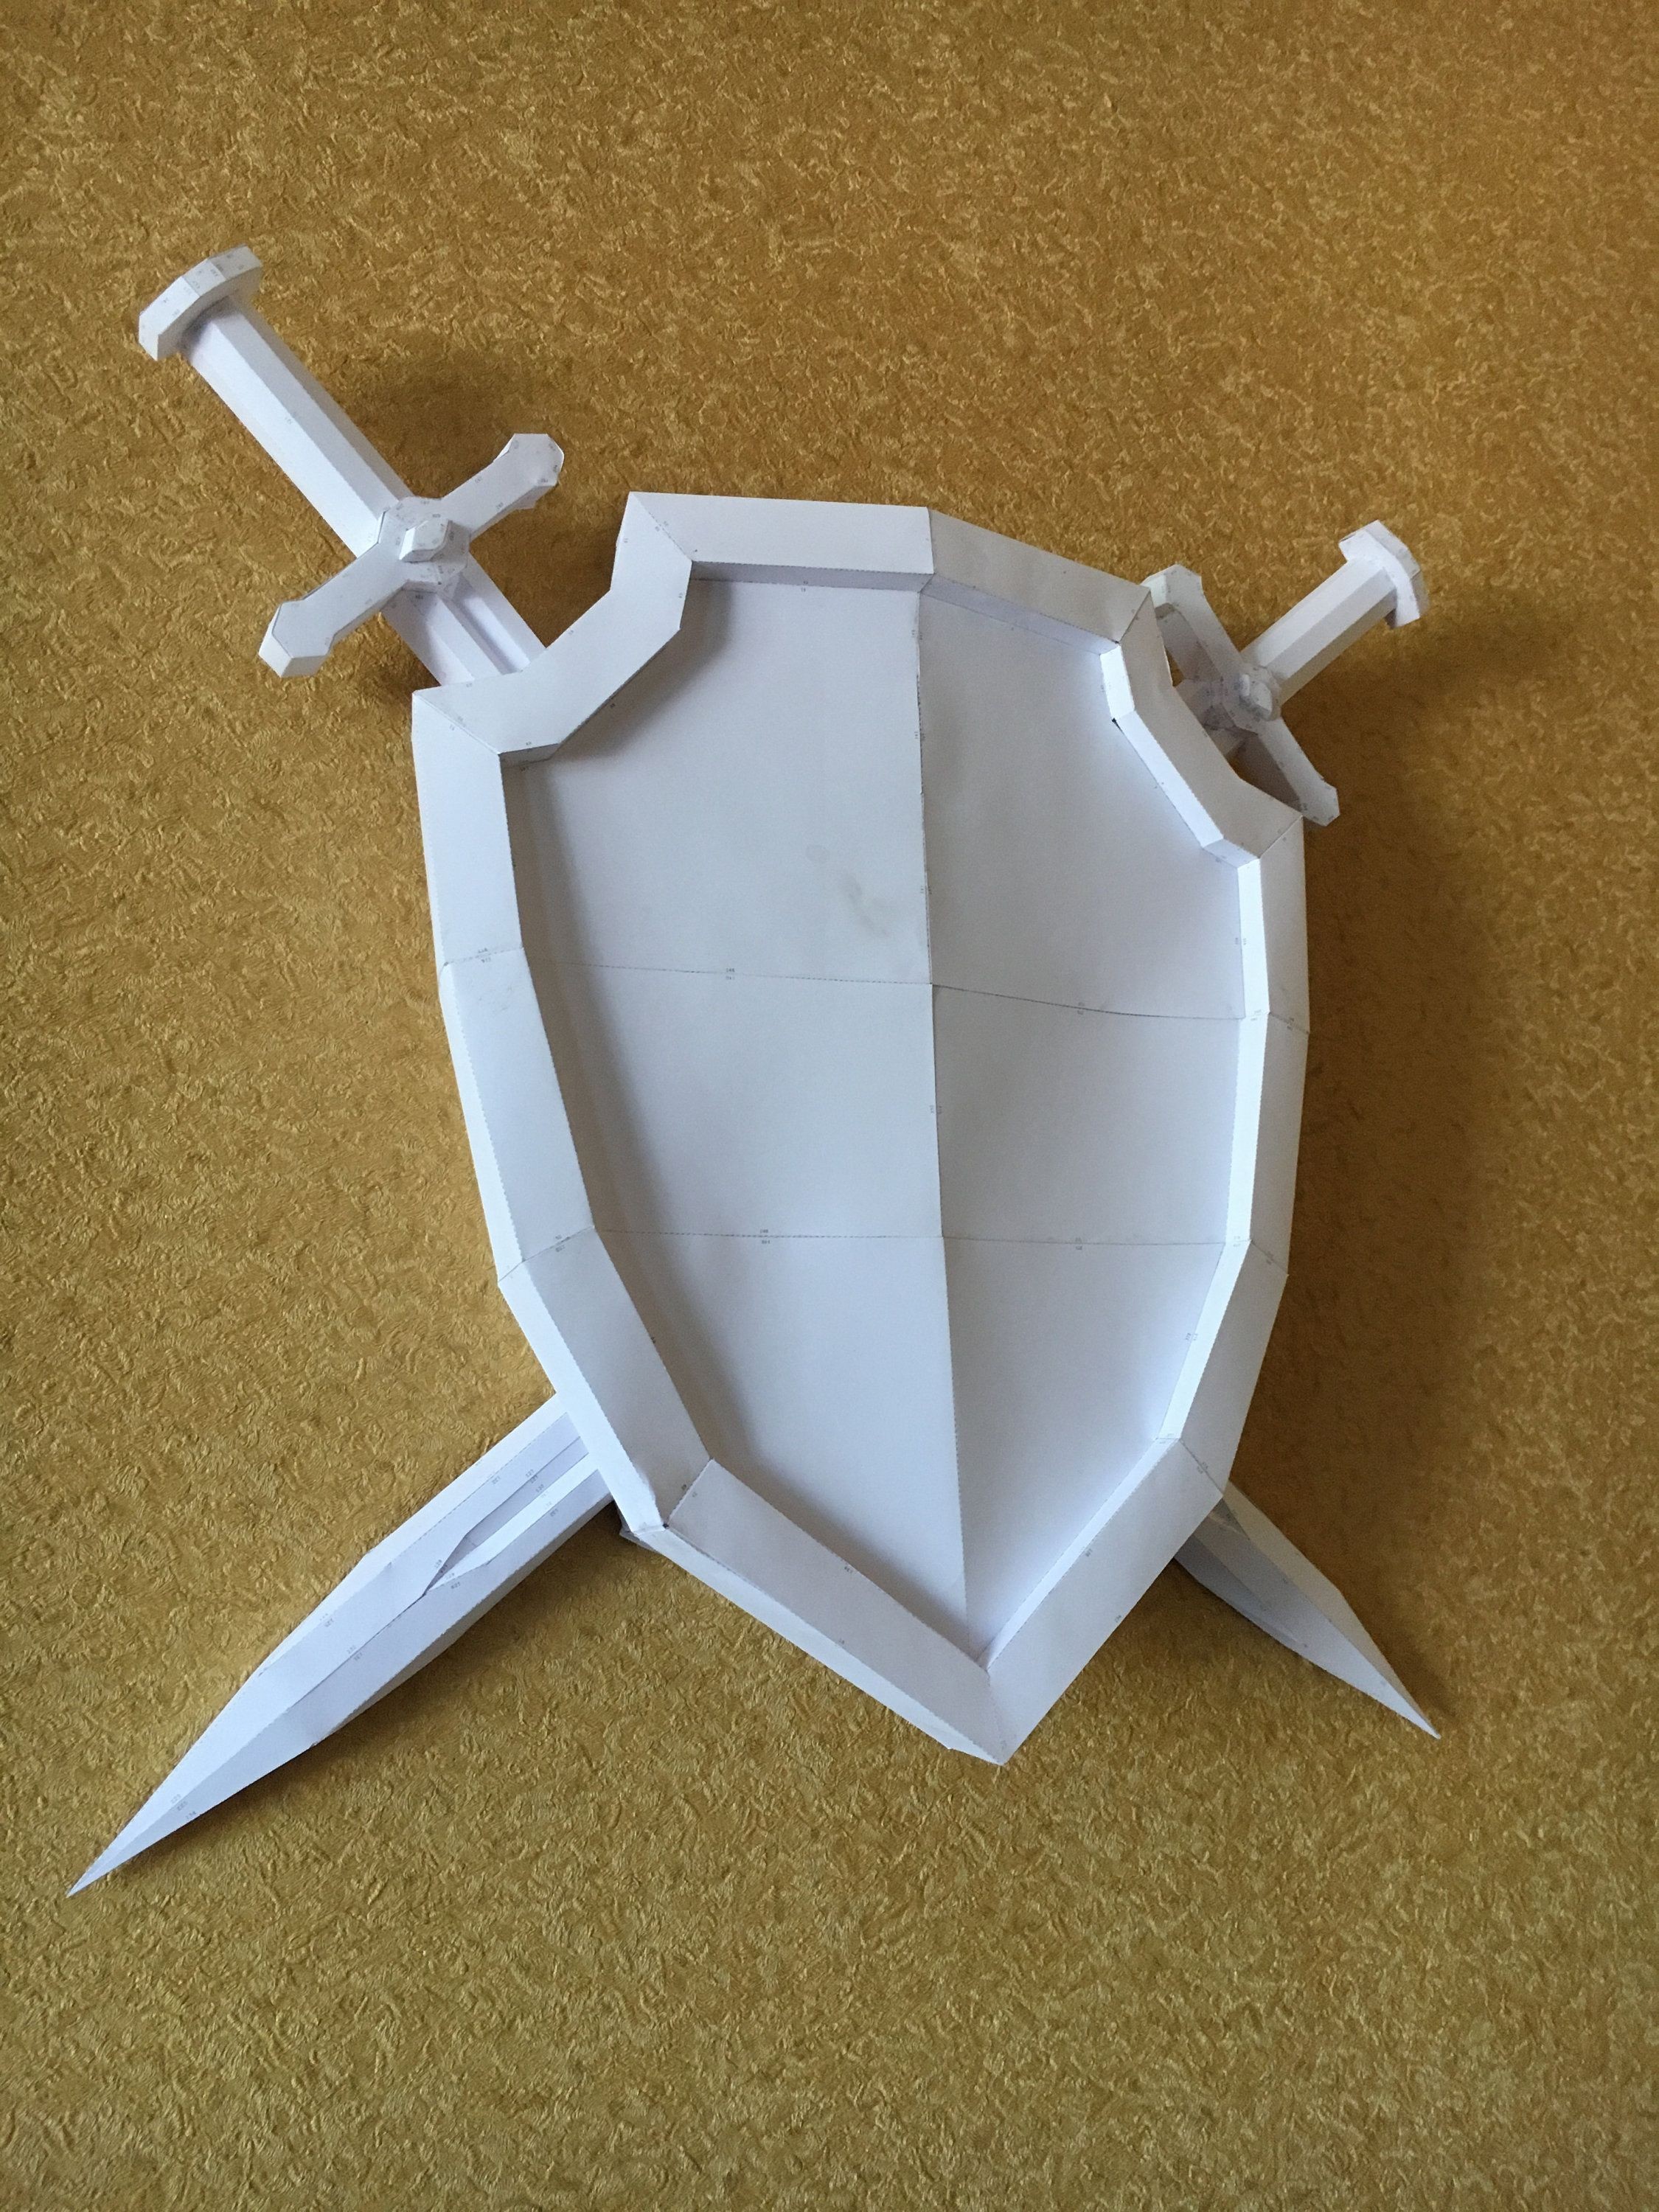 Papercraft Master Sword Sword Shield Diy Papercraft Model ÐÑÐ¼Ð°Ð¶Ð½ÑÐµ Ð¸Ð·Ð´ÐµÐ Ð¸Ñ